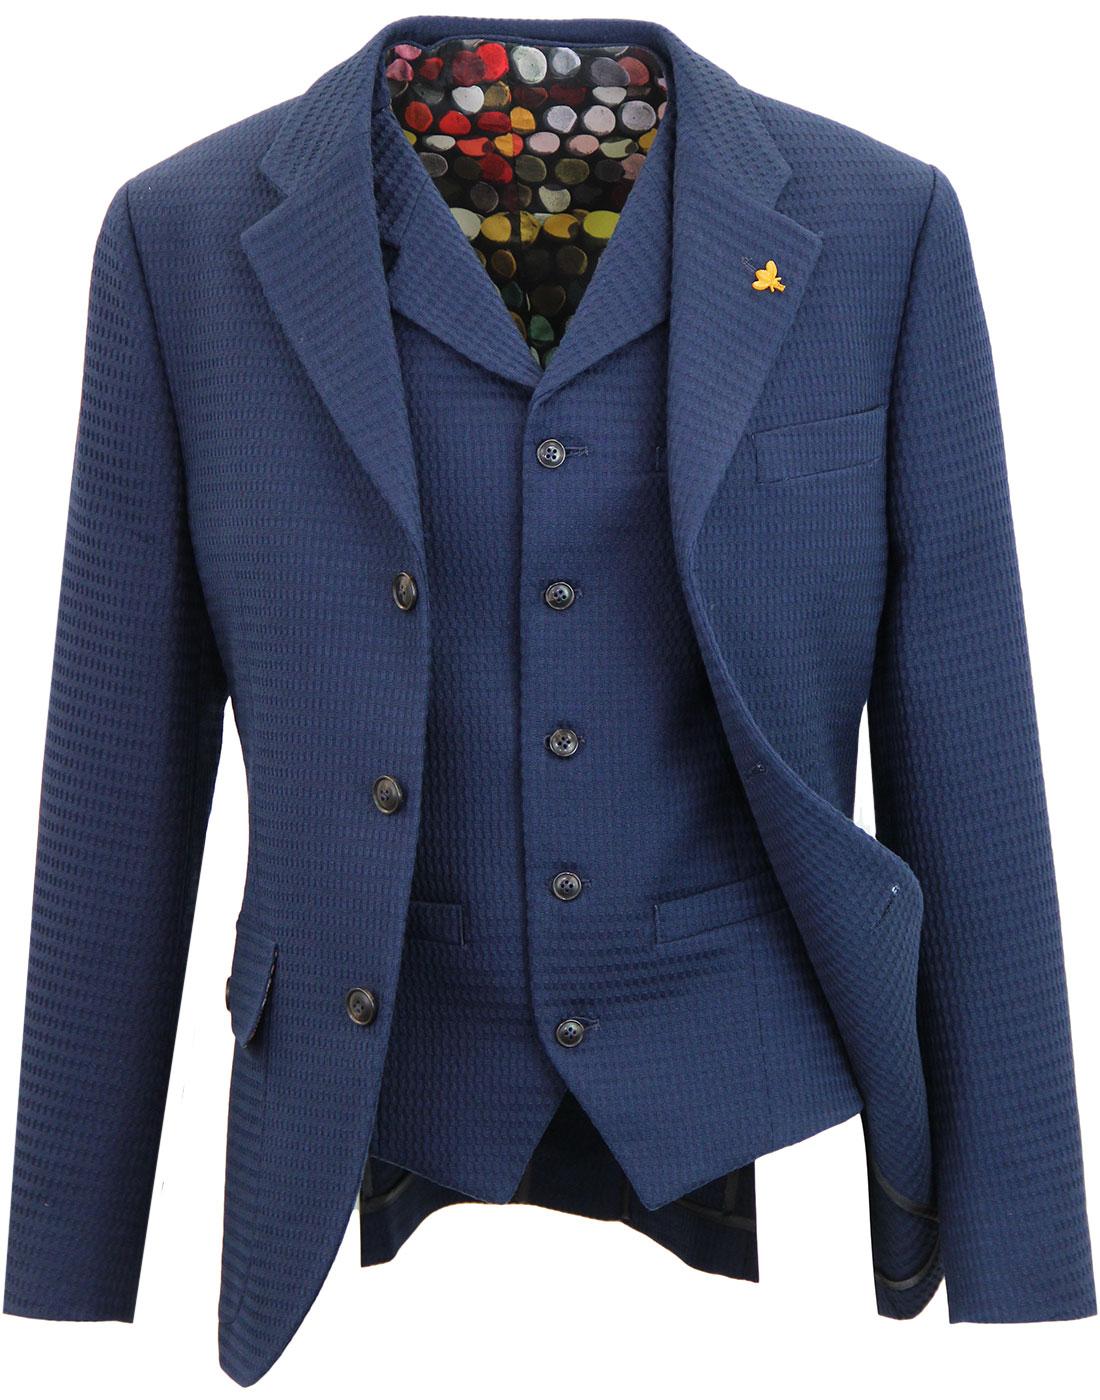 GIBSON LONDON Matching Mod Navy Blazer & Waistcoat